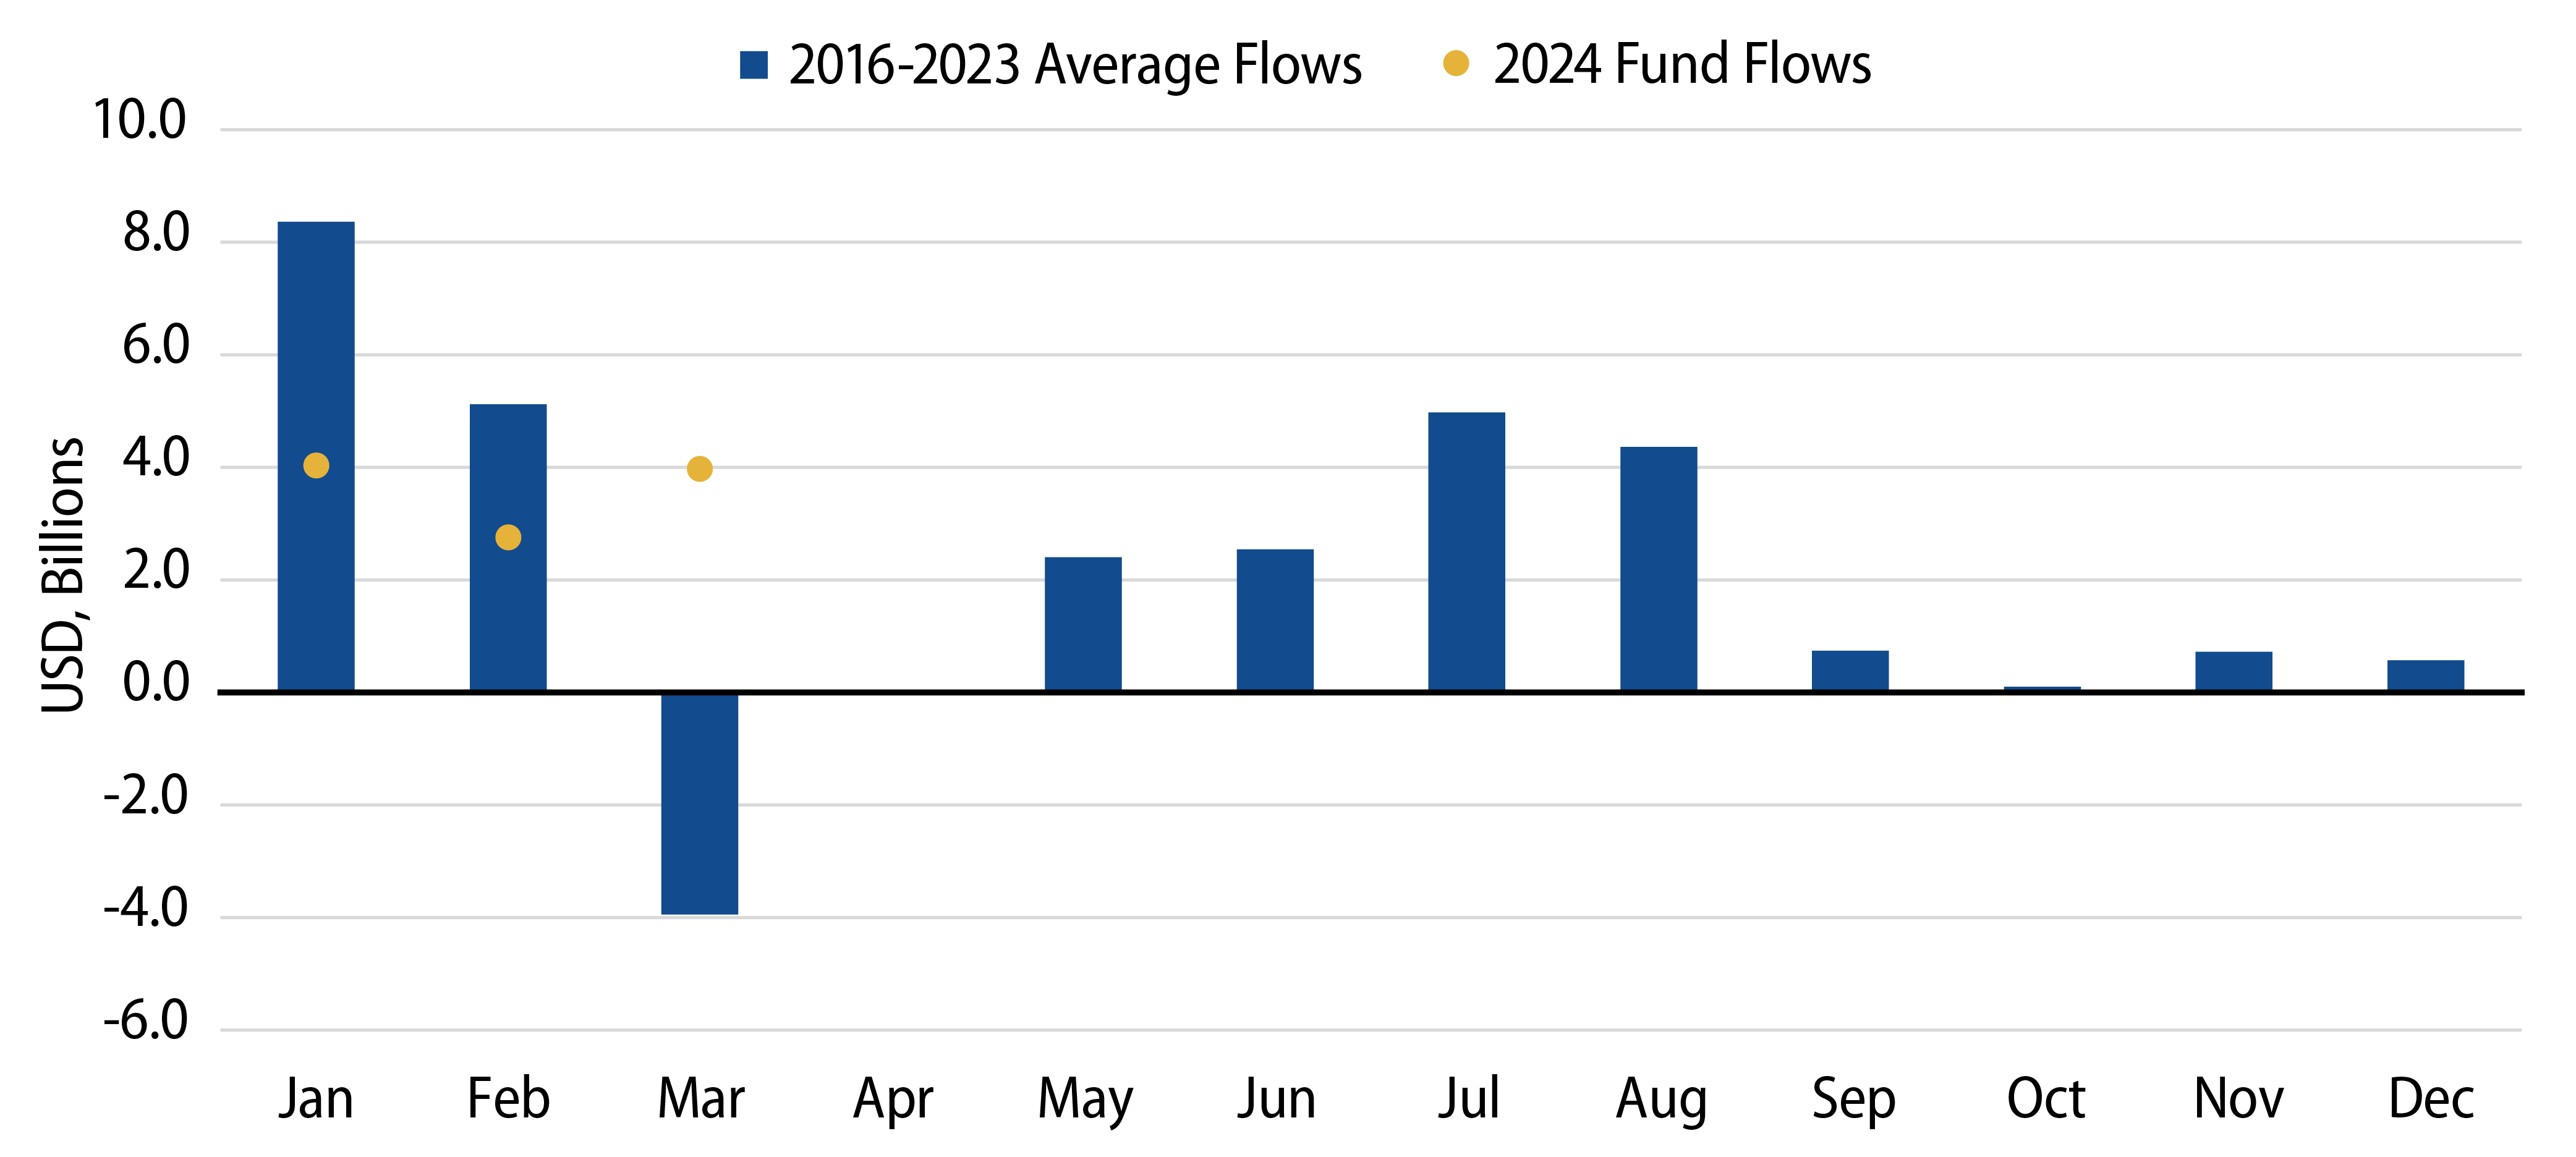  ICI Municipal Fund Flows—2016-2023 Average vs. 2024